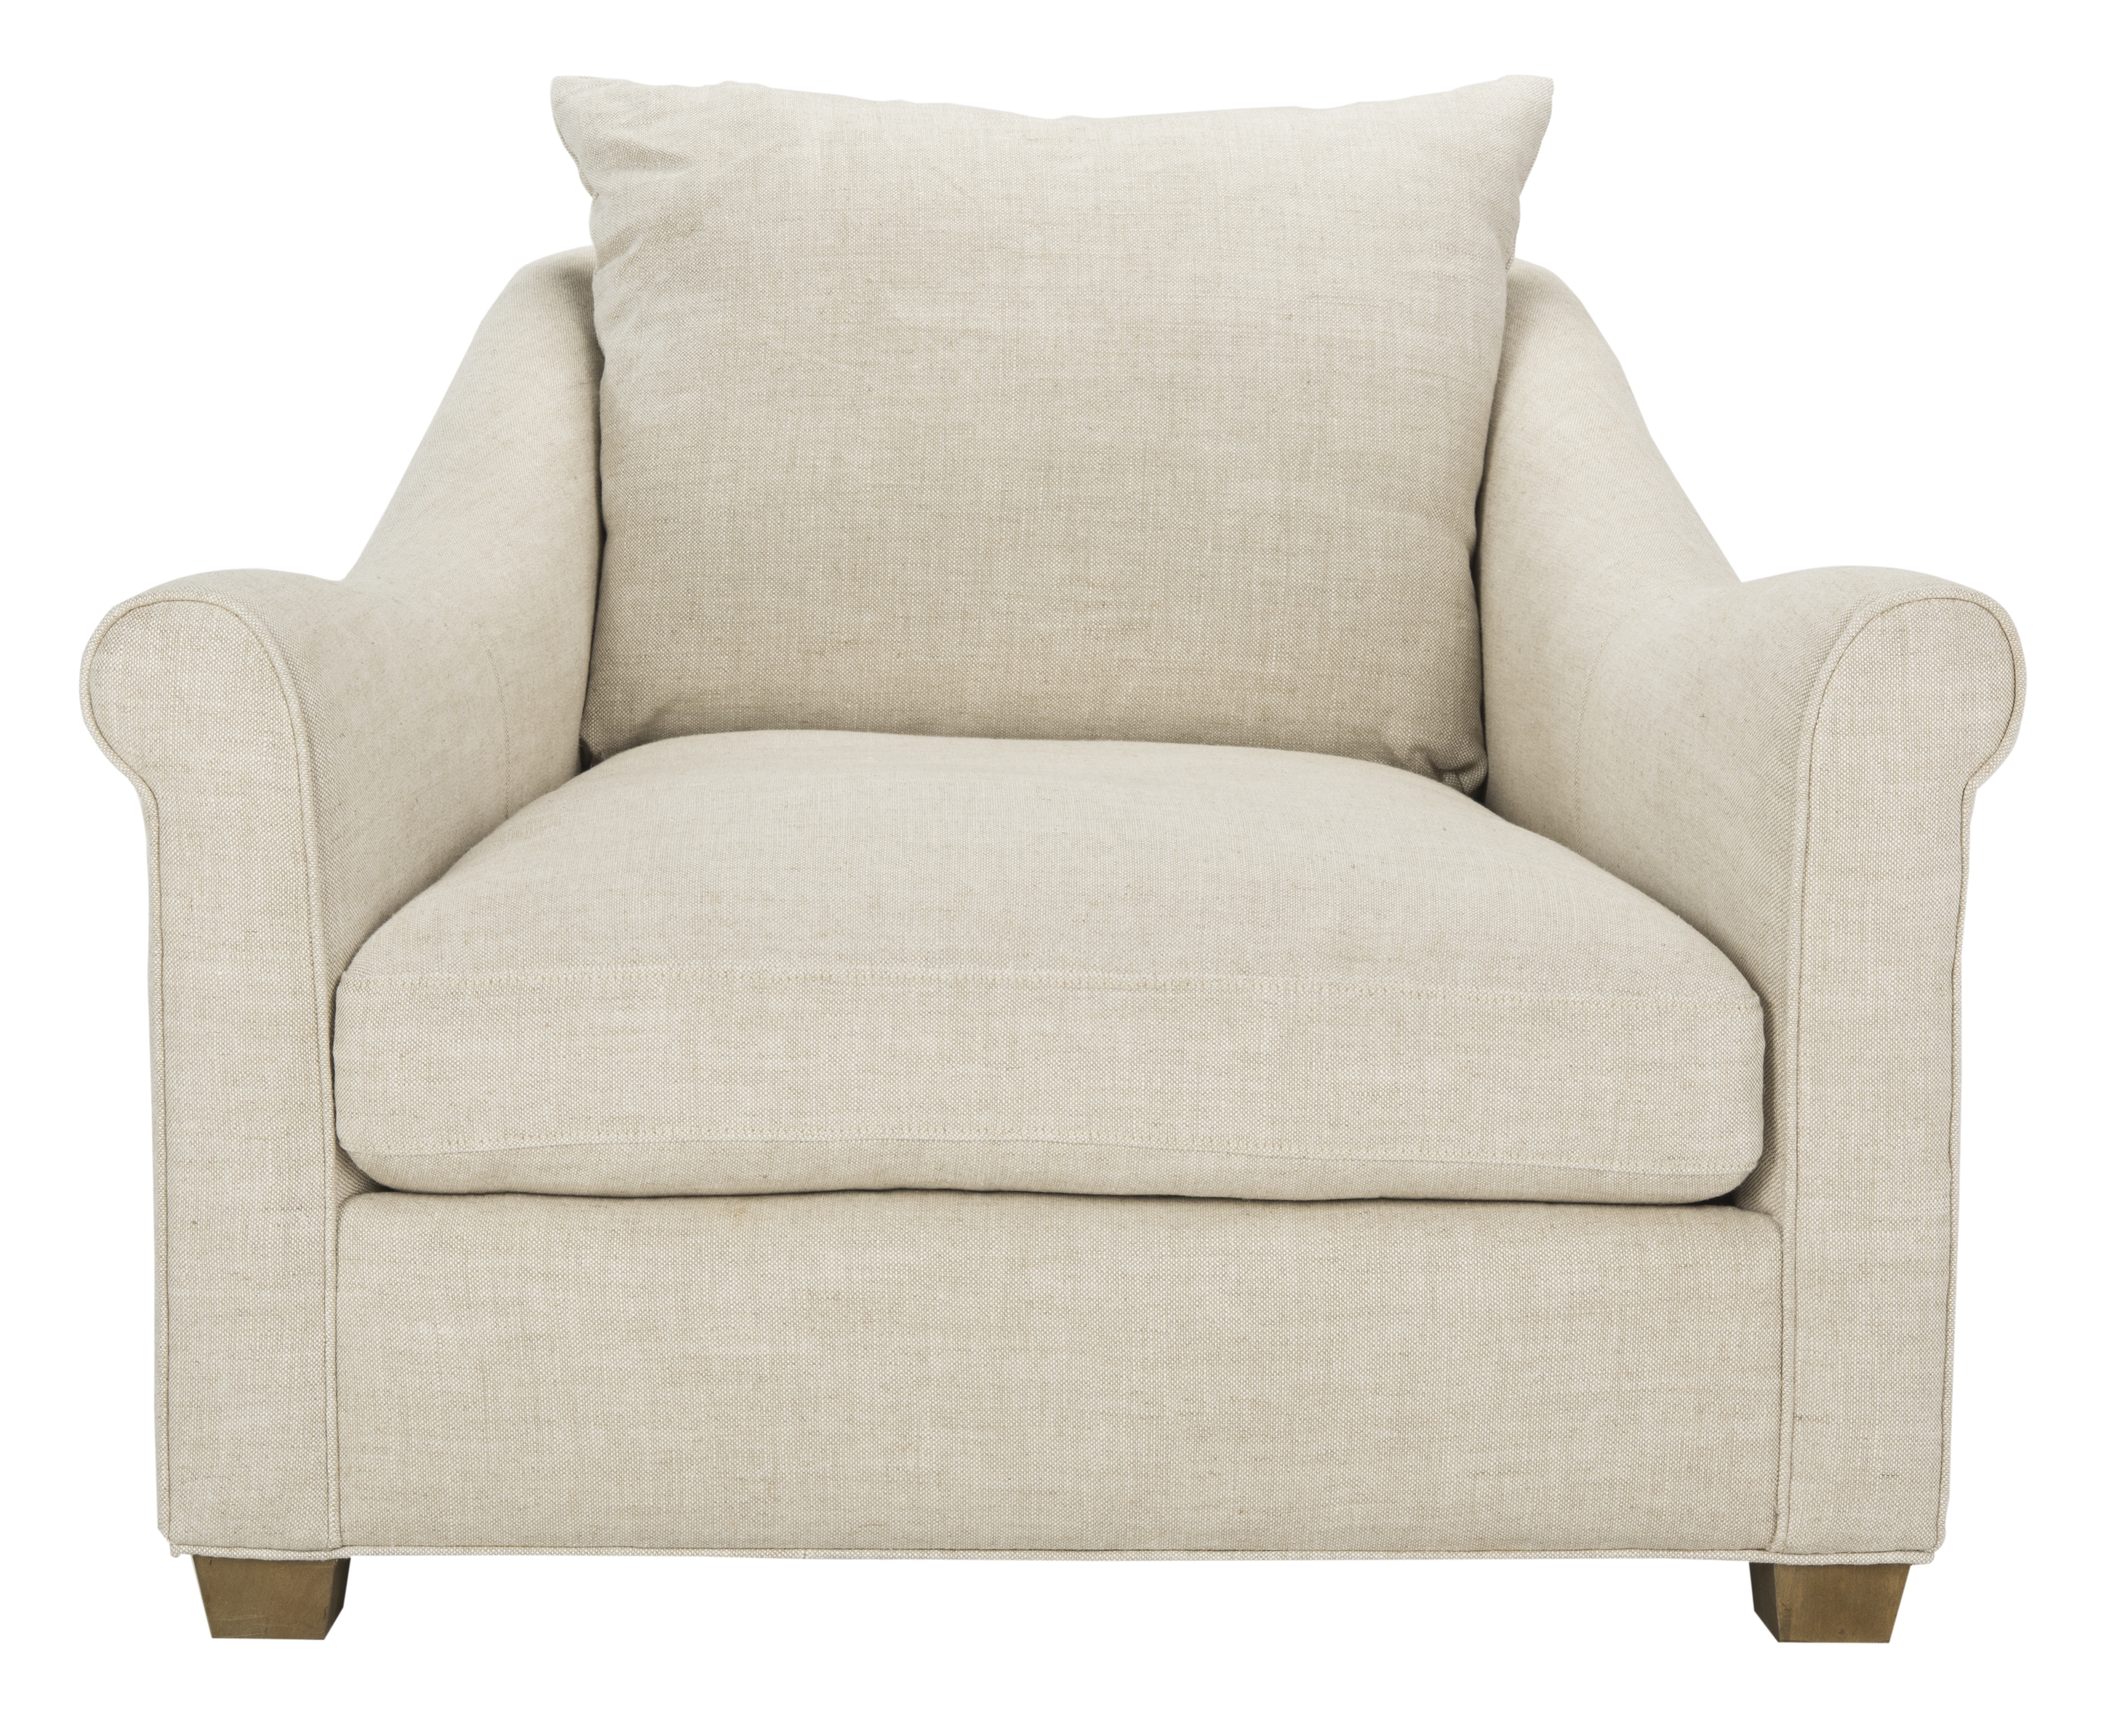 Frasier Linen Chair - Natural - Arlo Home - Image 0